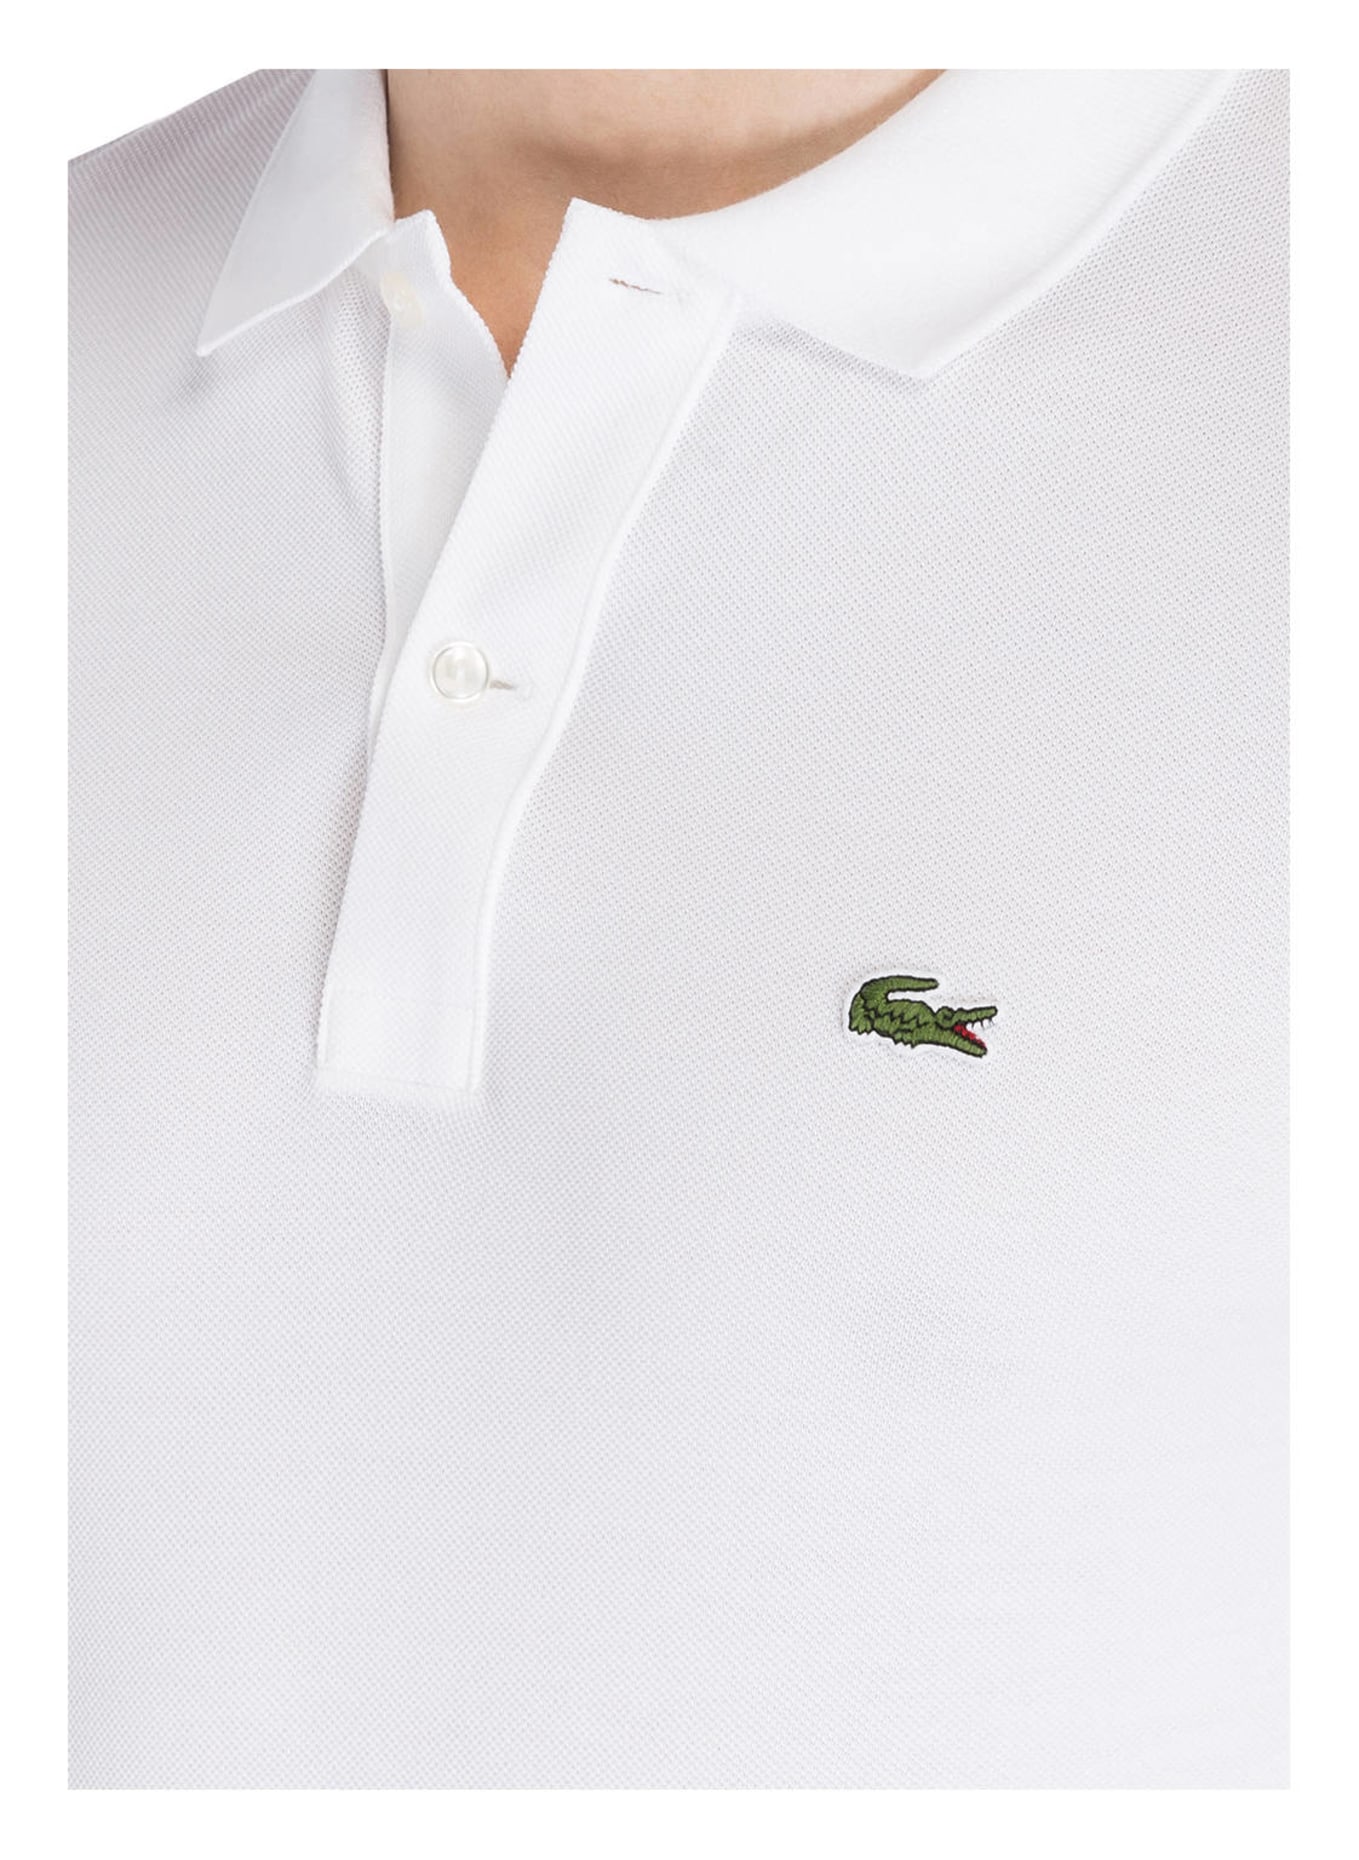 LACOSTE Piqué-Poloshirt Slim Fit, Farbe: WEISS (Bild 4)